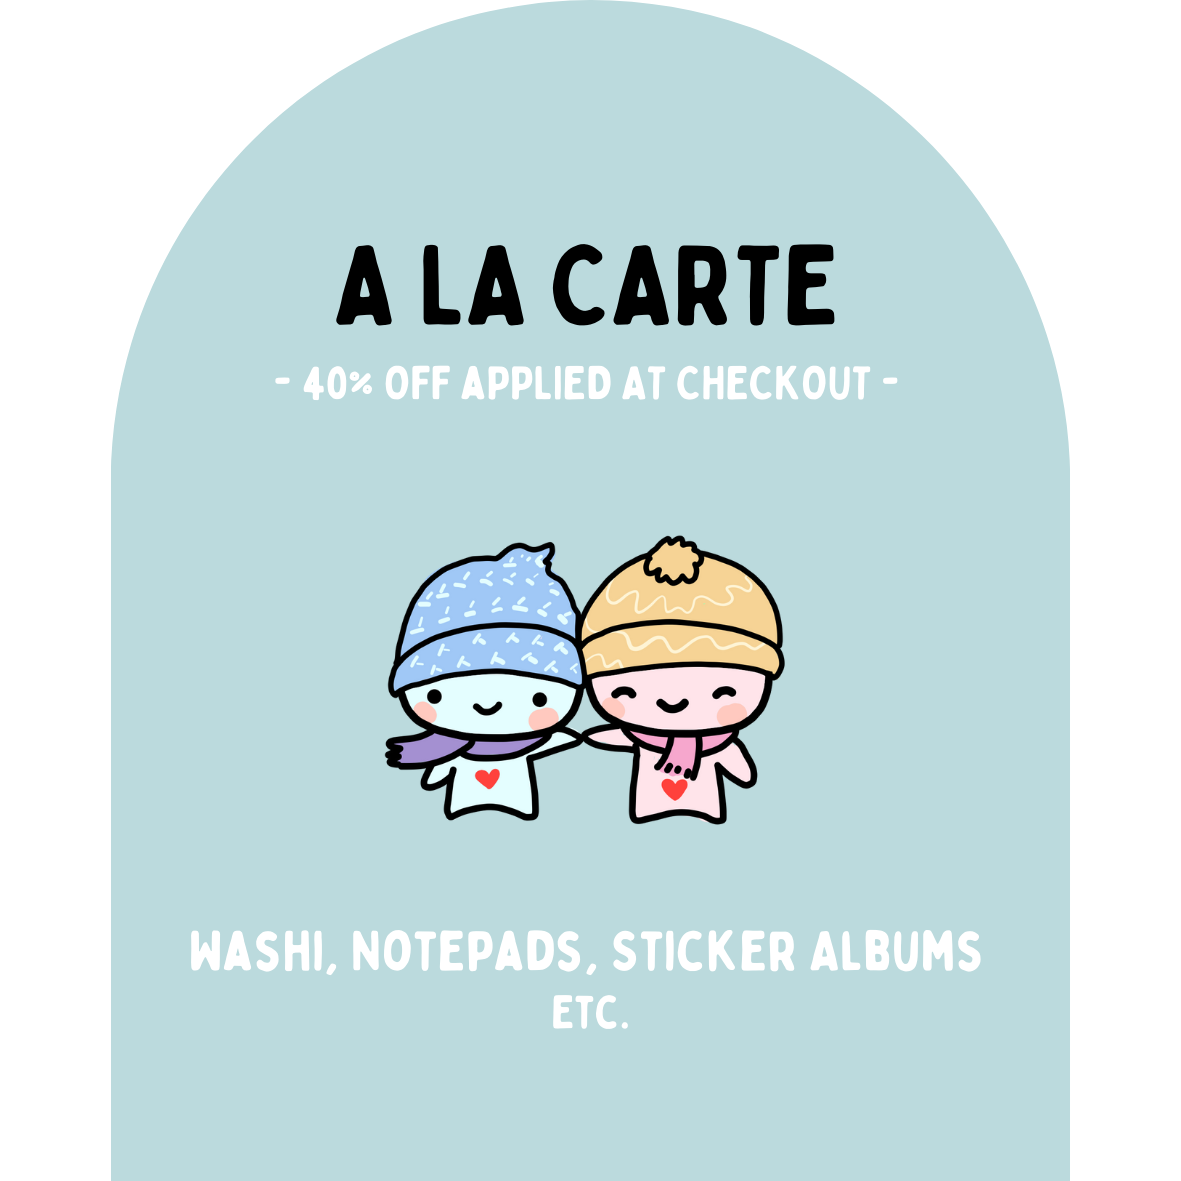 A La Carte Items (40% off at checkout)